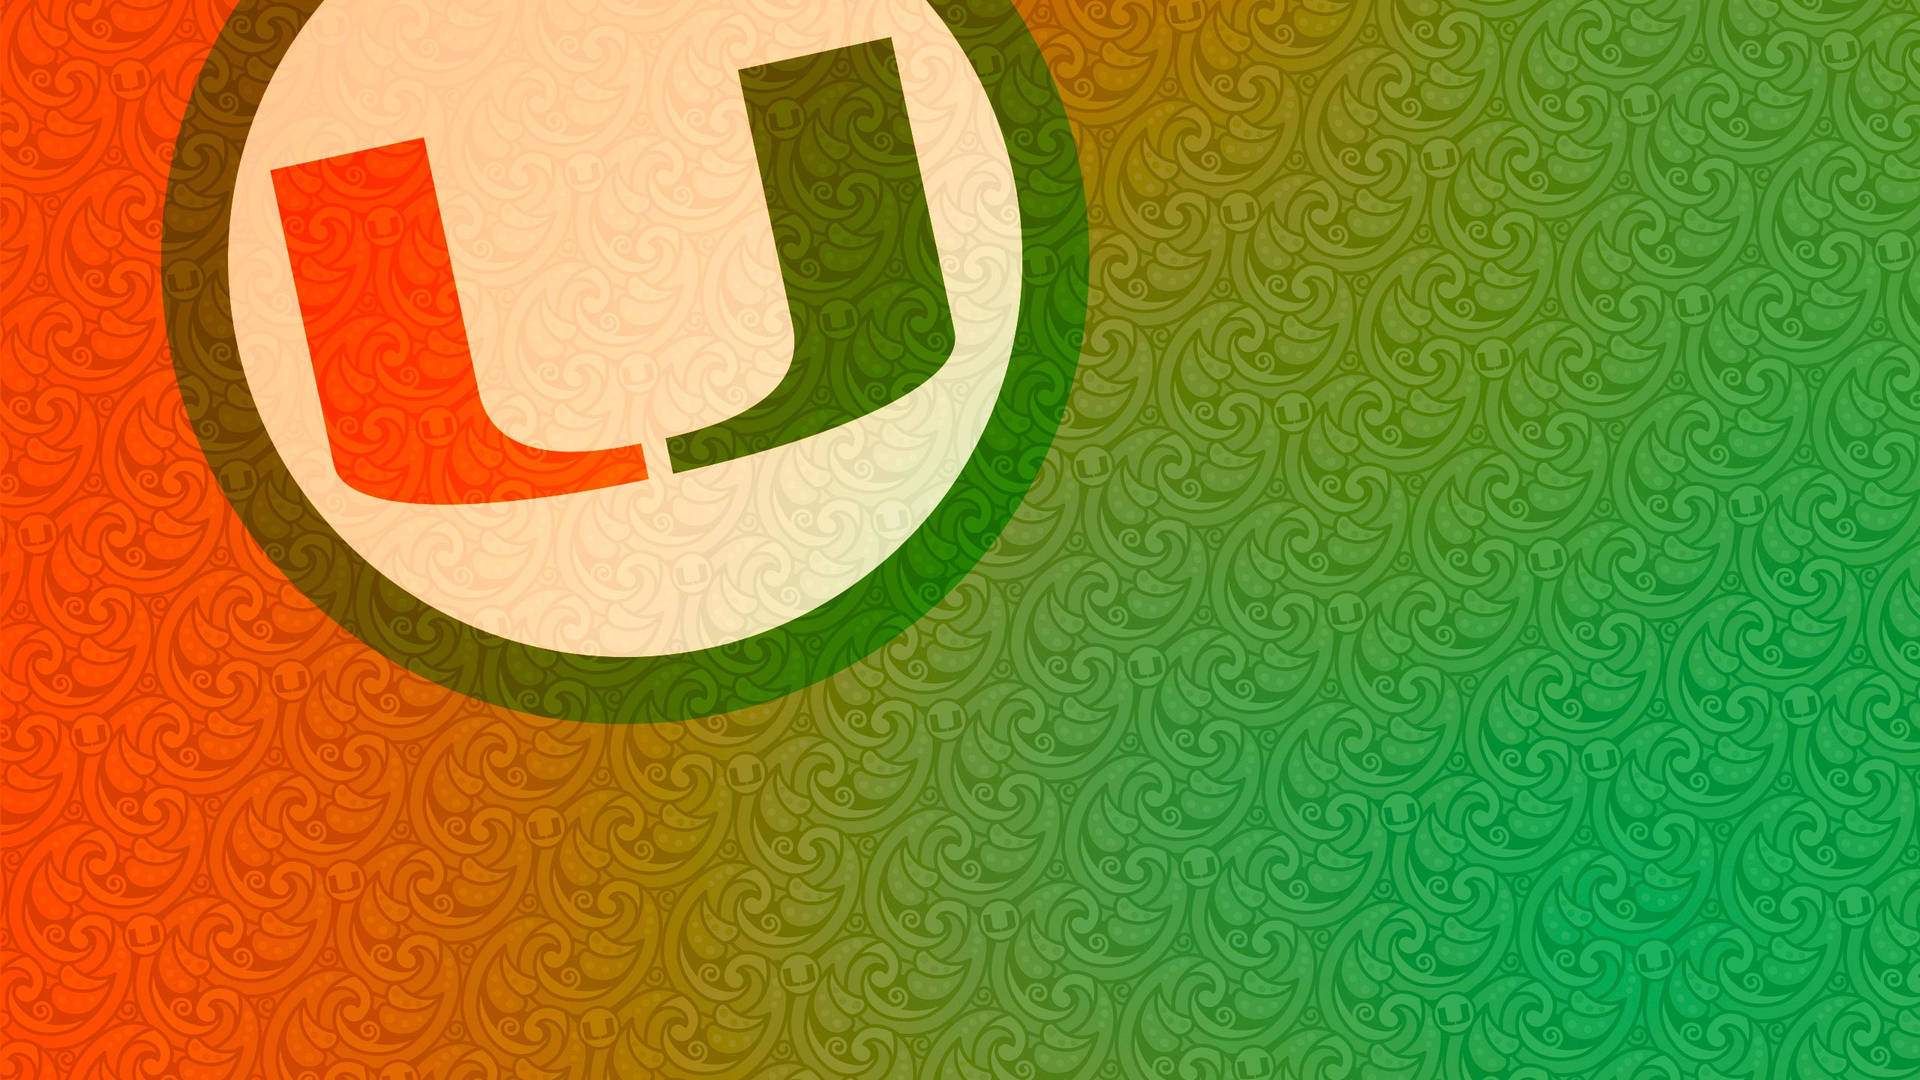 Universitätvon Miami Roundel Logo Wallpaper